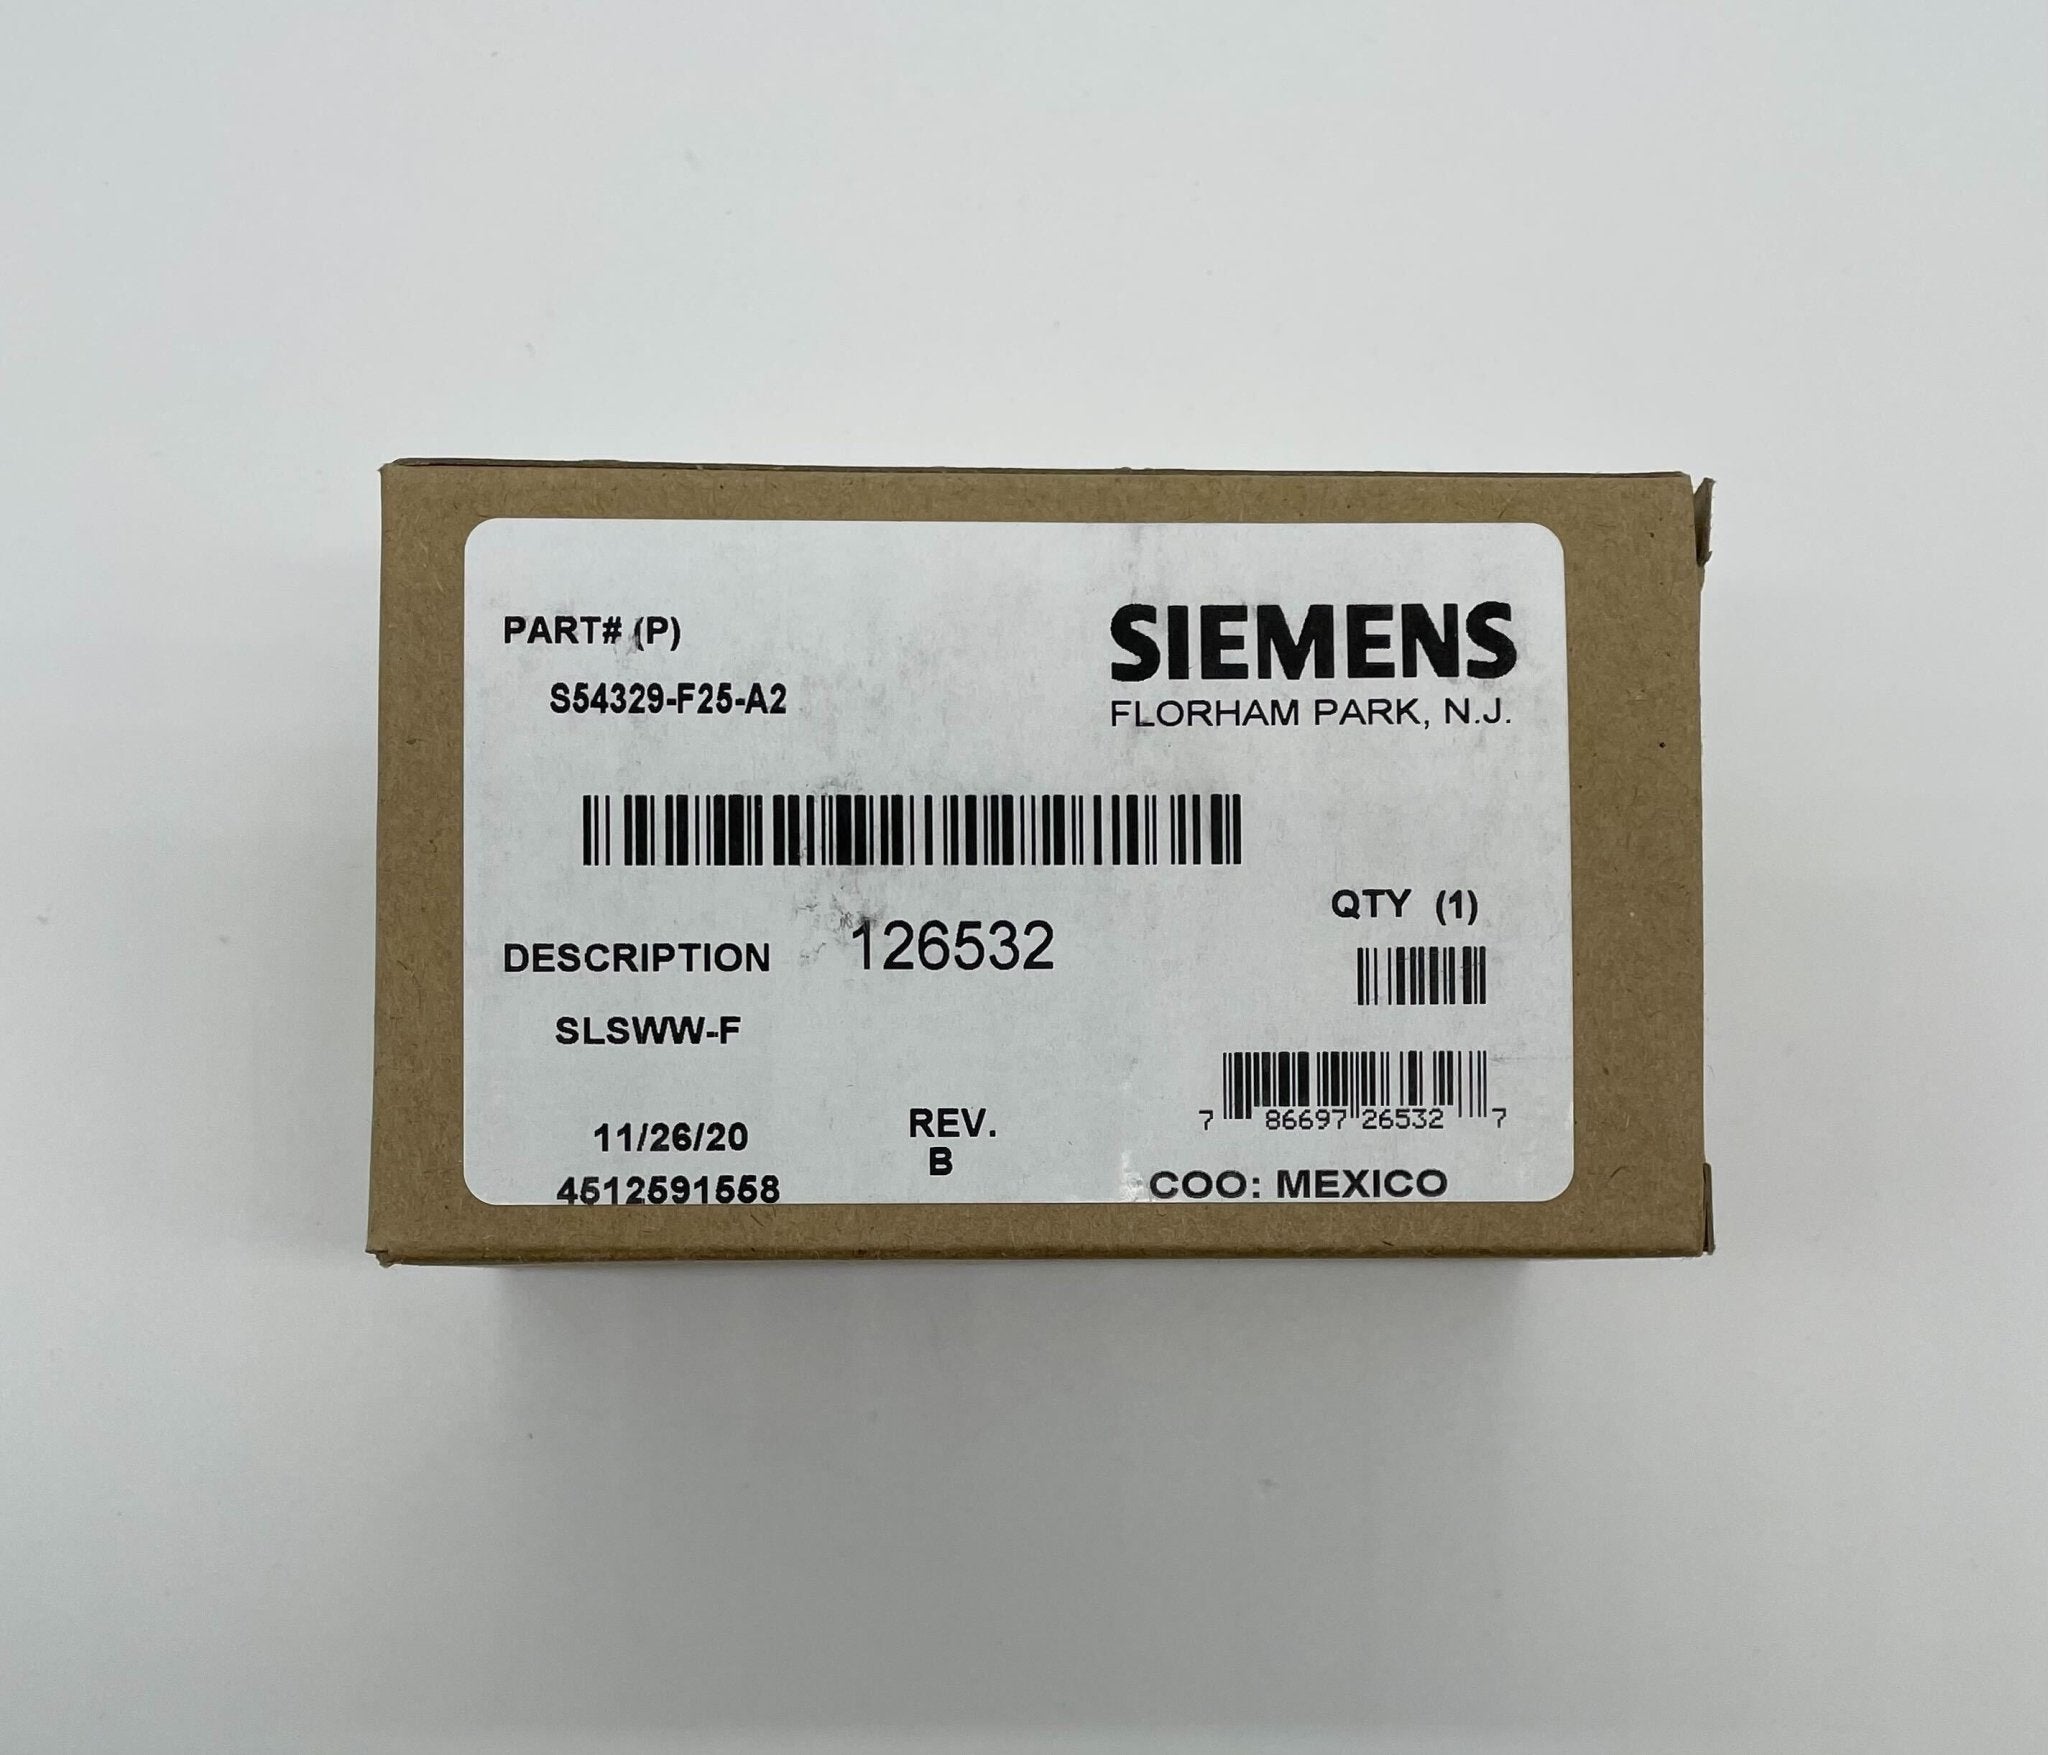 Siemens SLSWW-F - The Fire Alarm Supplier